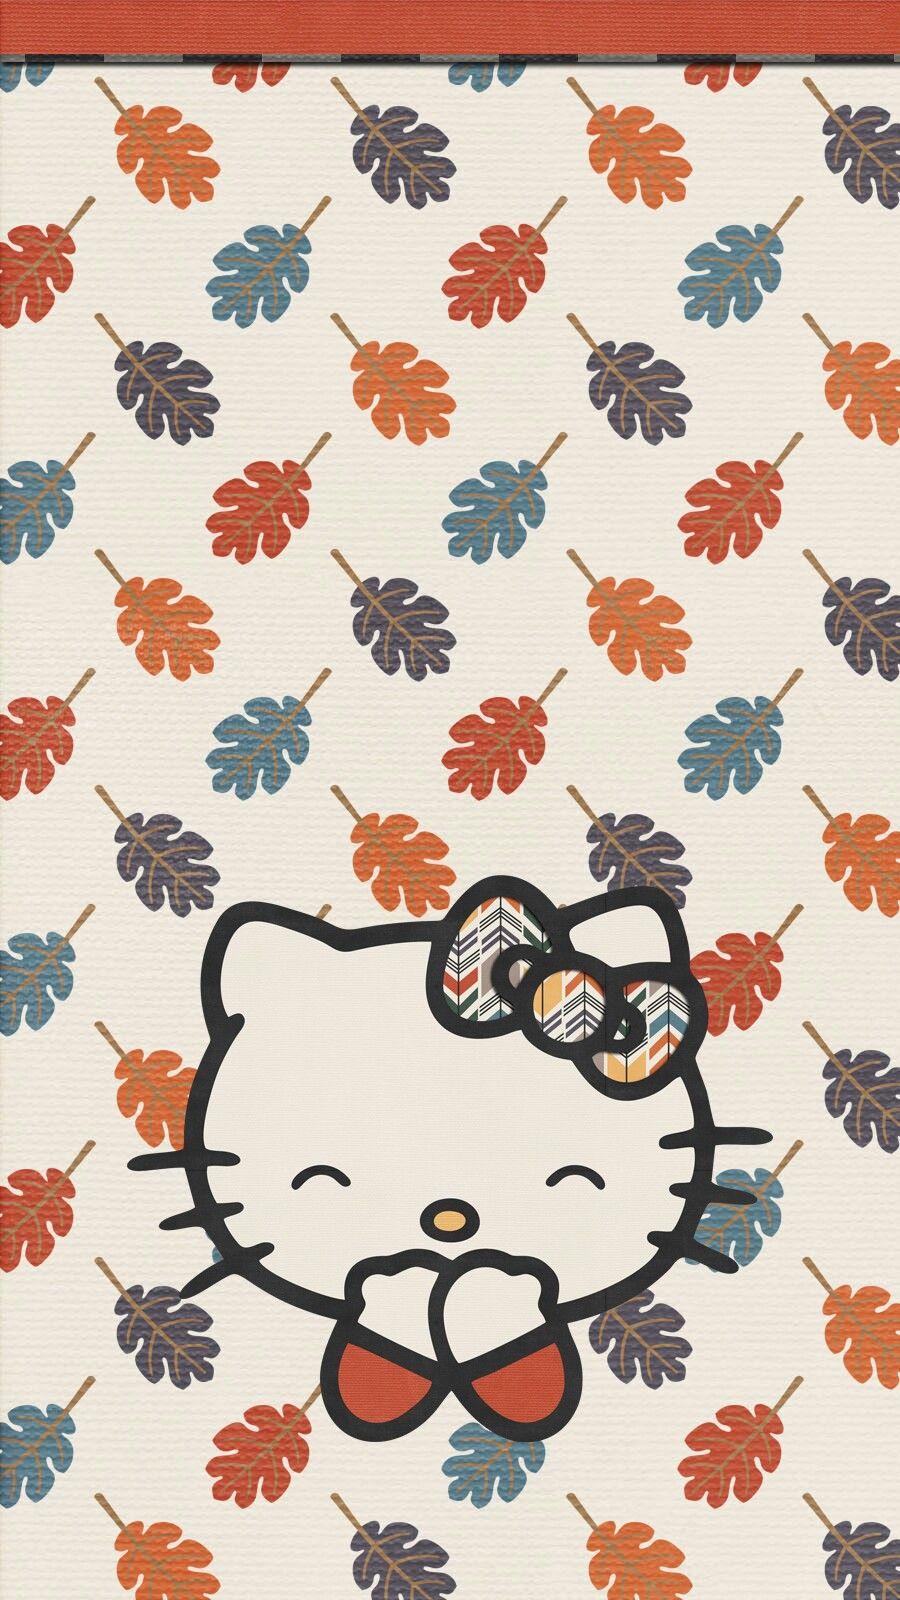 hello kitty fall wallpaper